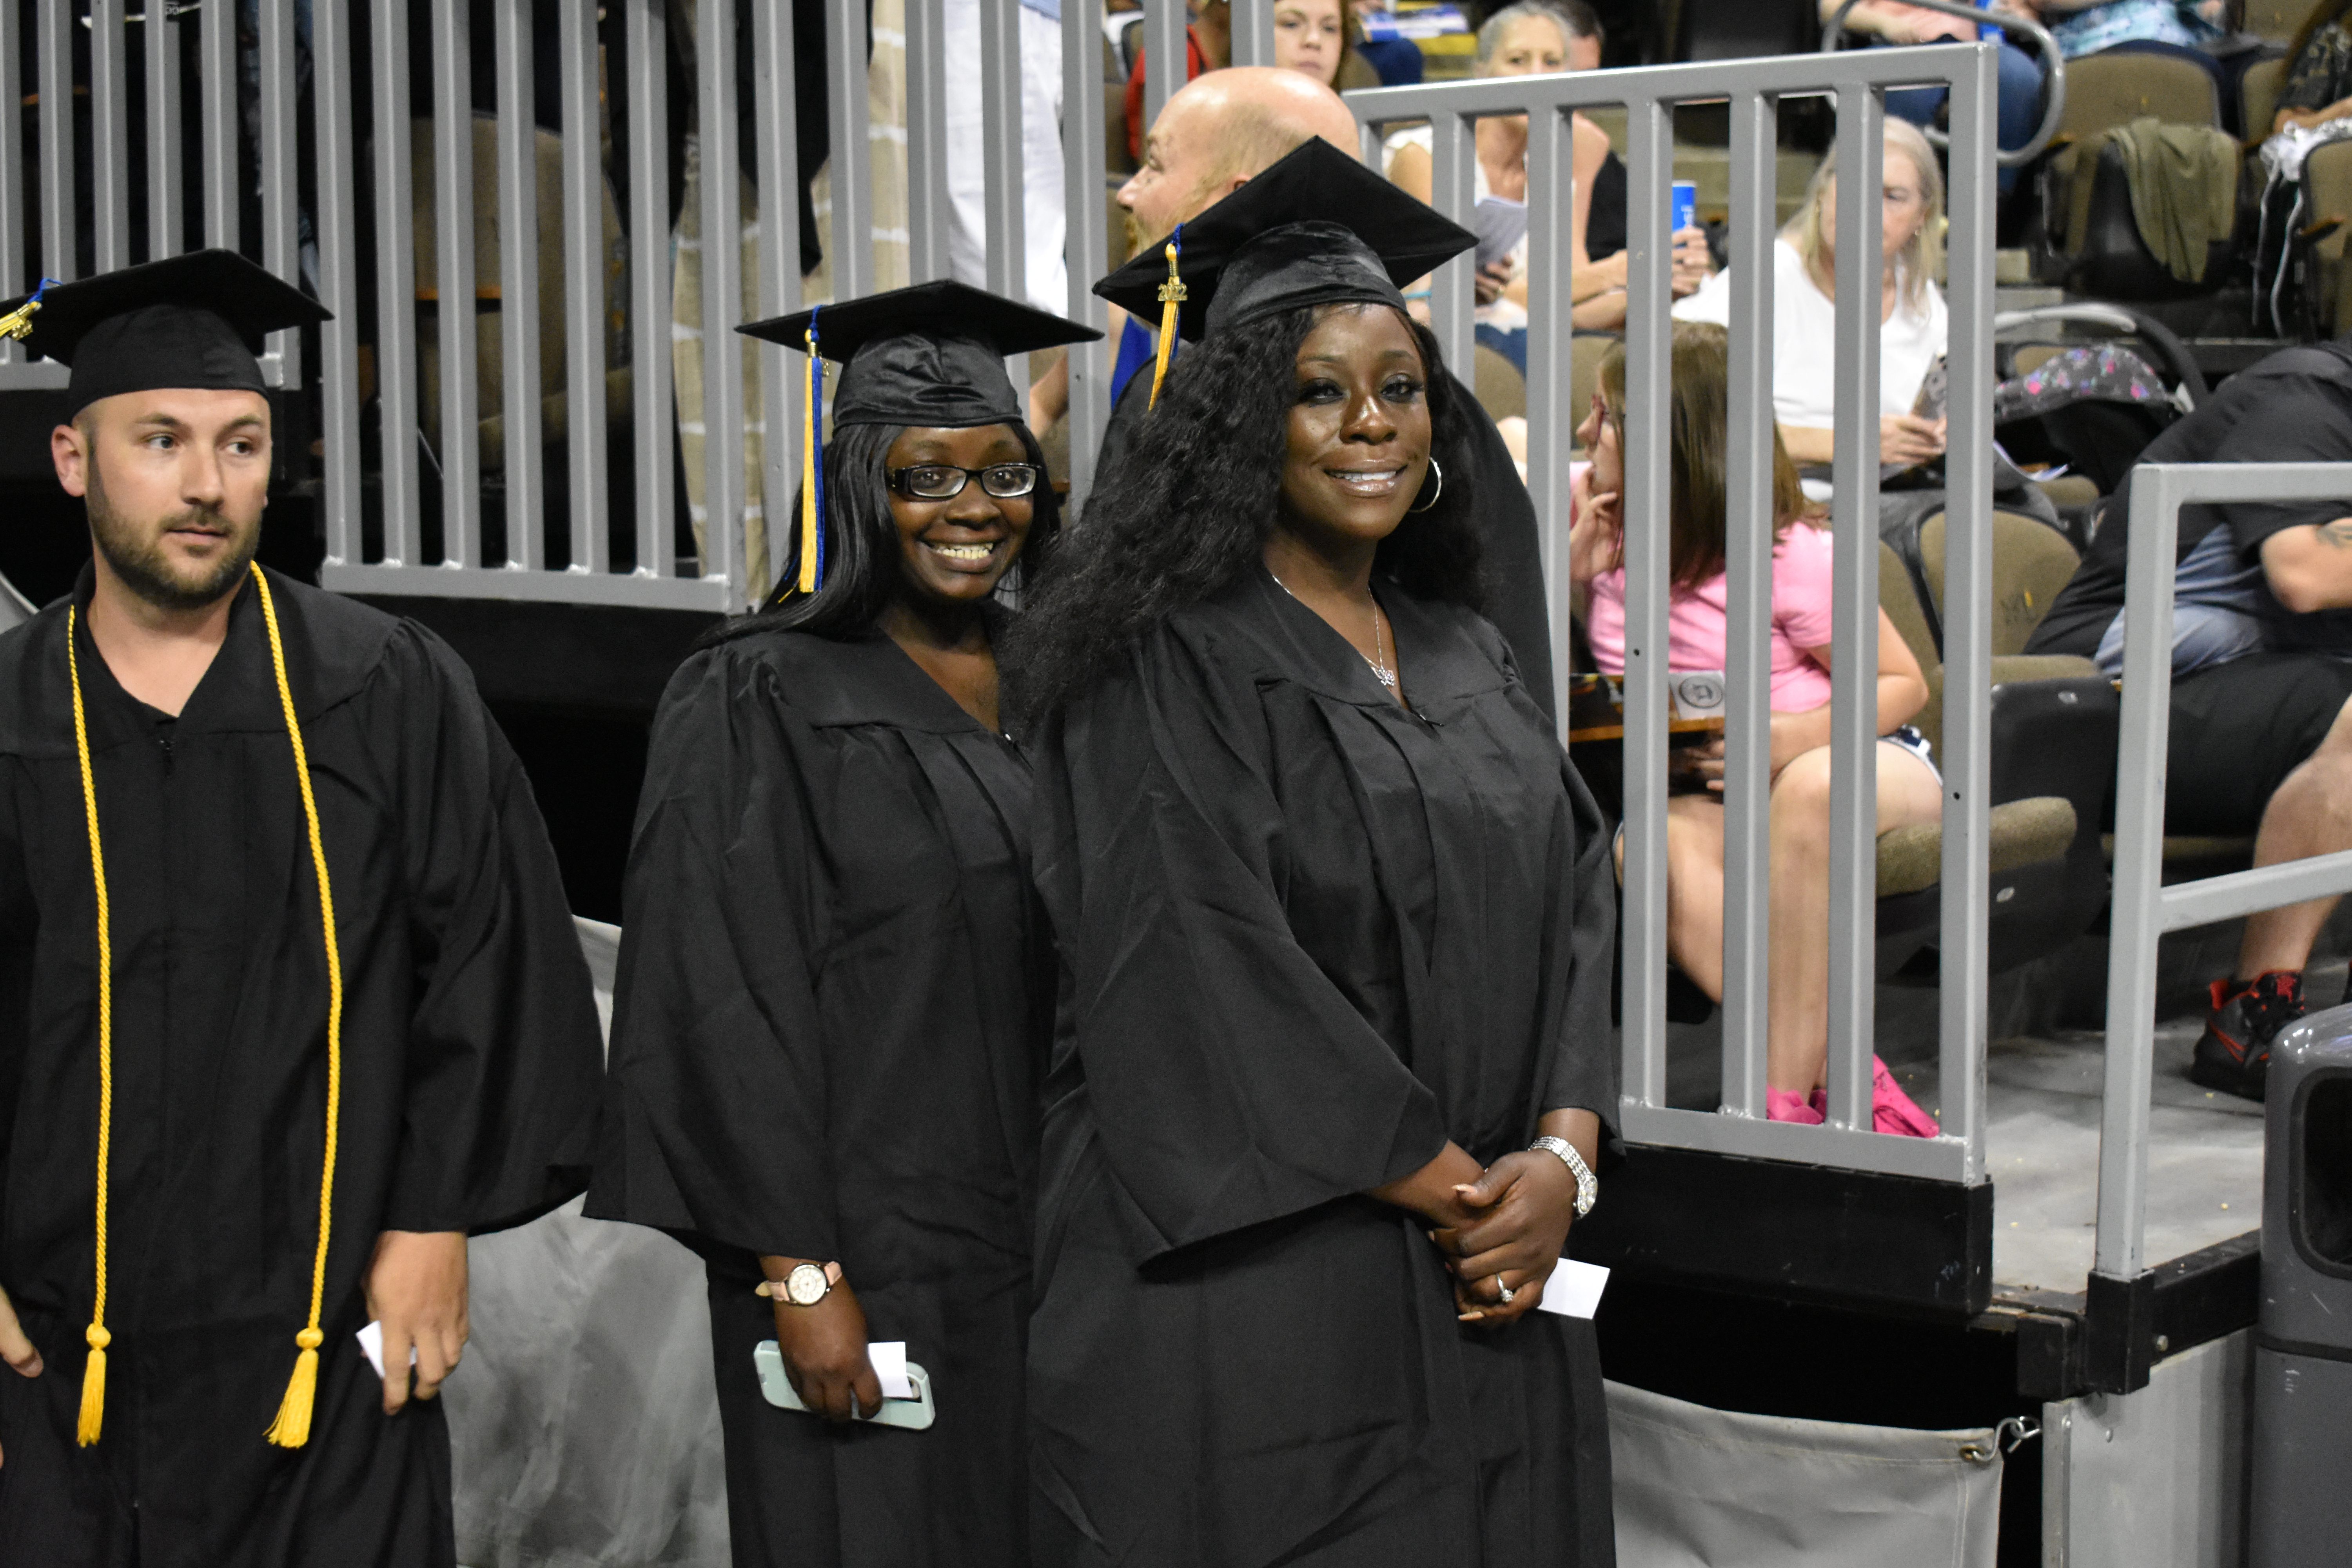 3 Students preparing to walk the line at Graduation. 